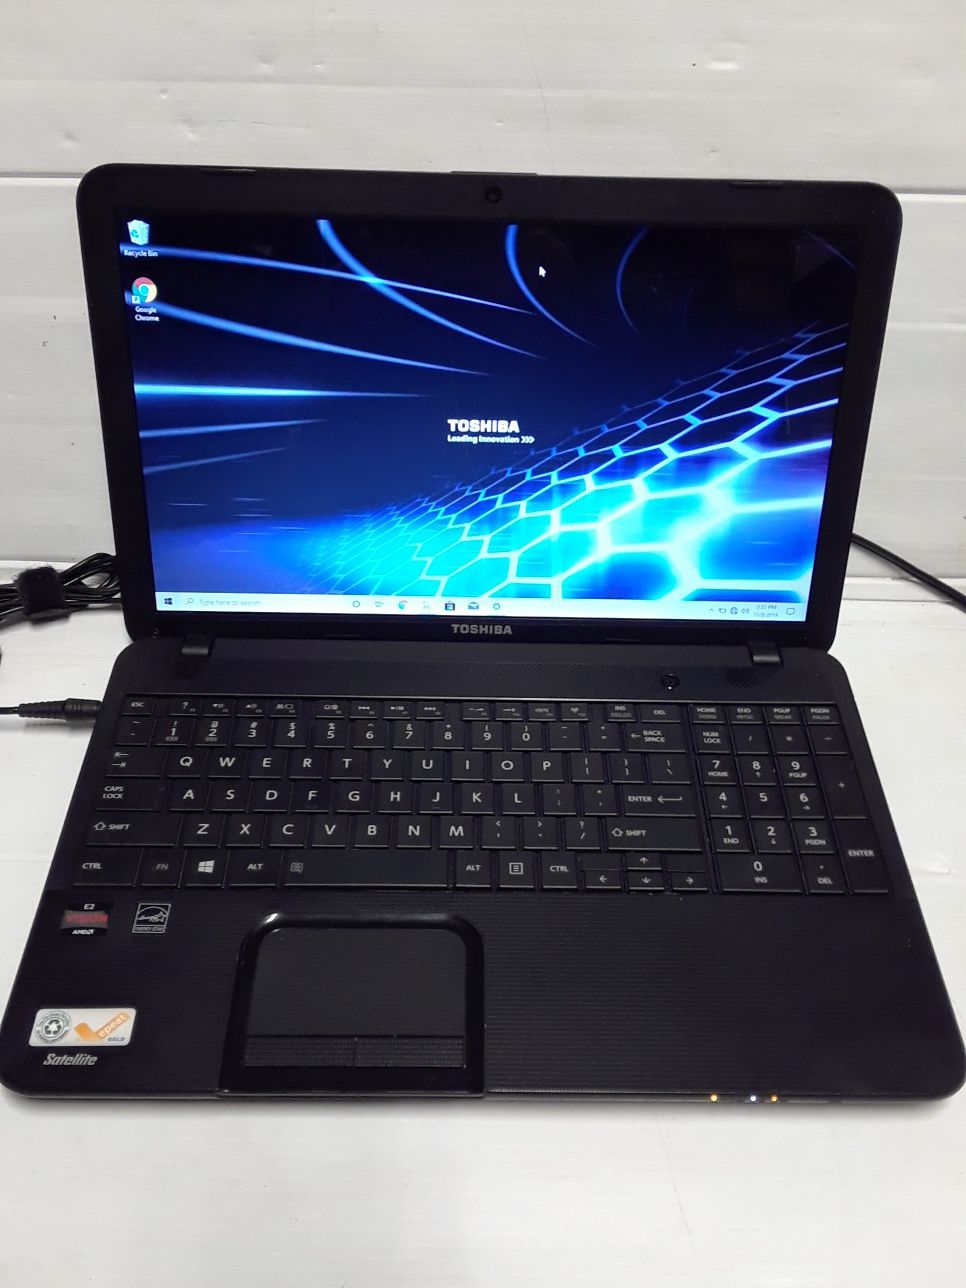 Toshiba Satellite C855 Windows 10 laptop